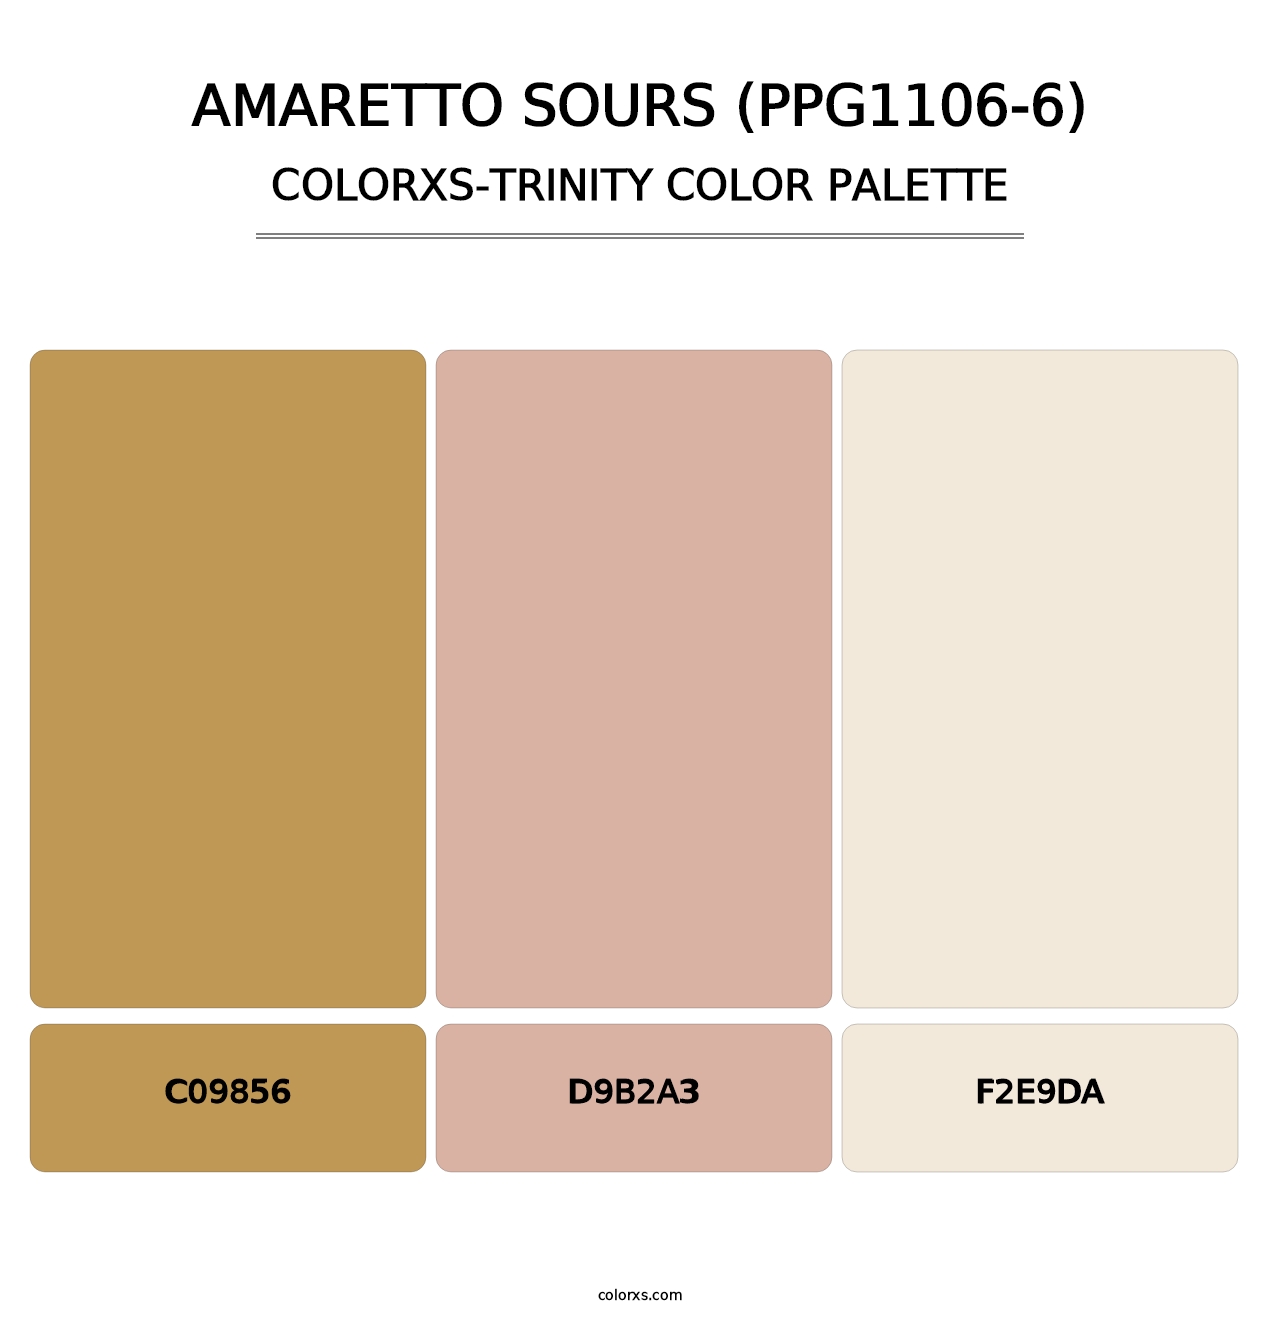 Amaretto Sours (PPG1106-6) - Colorxs Trinity Palette